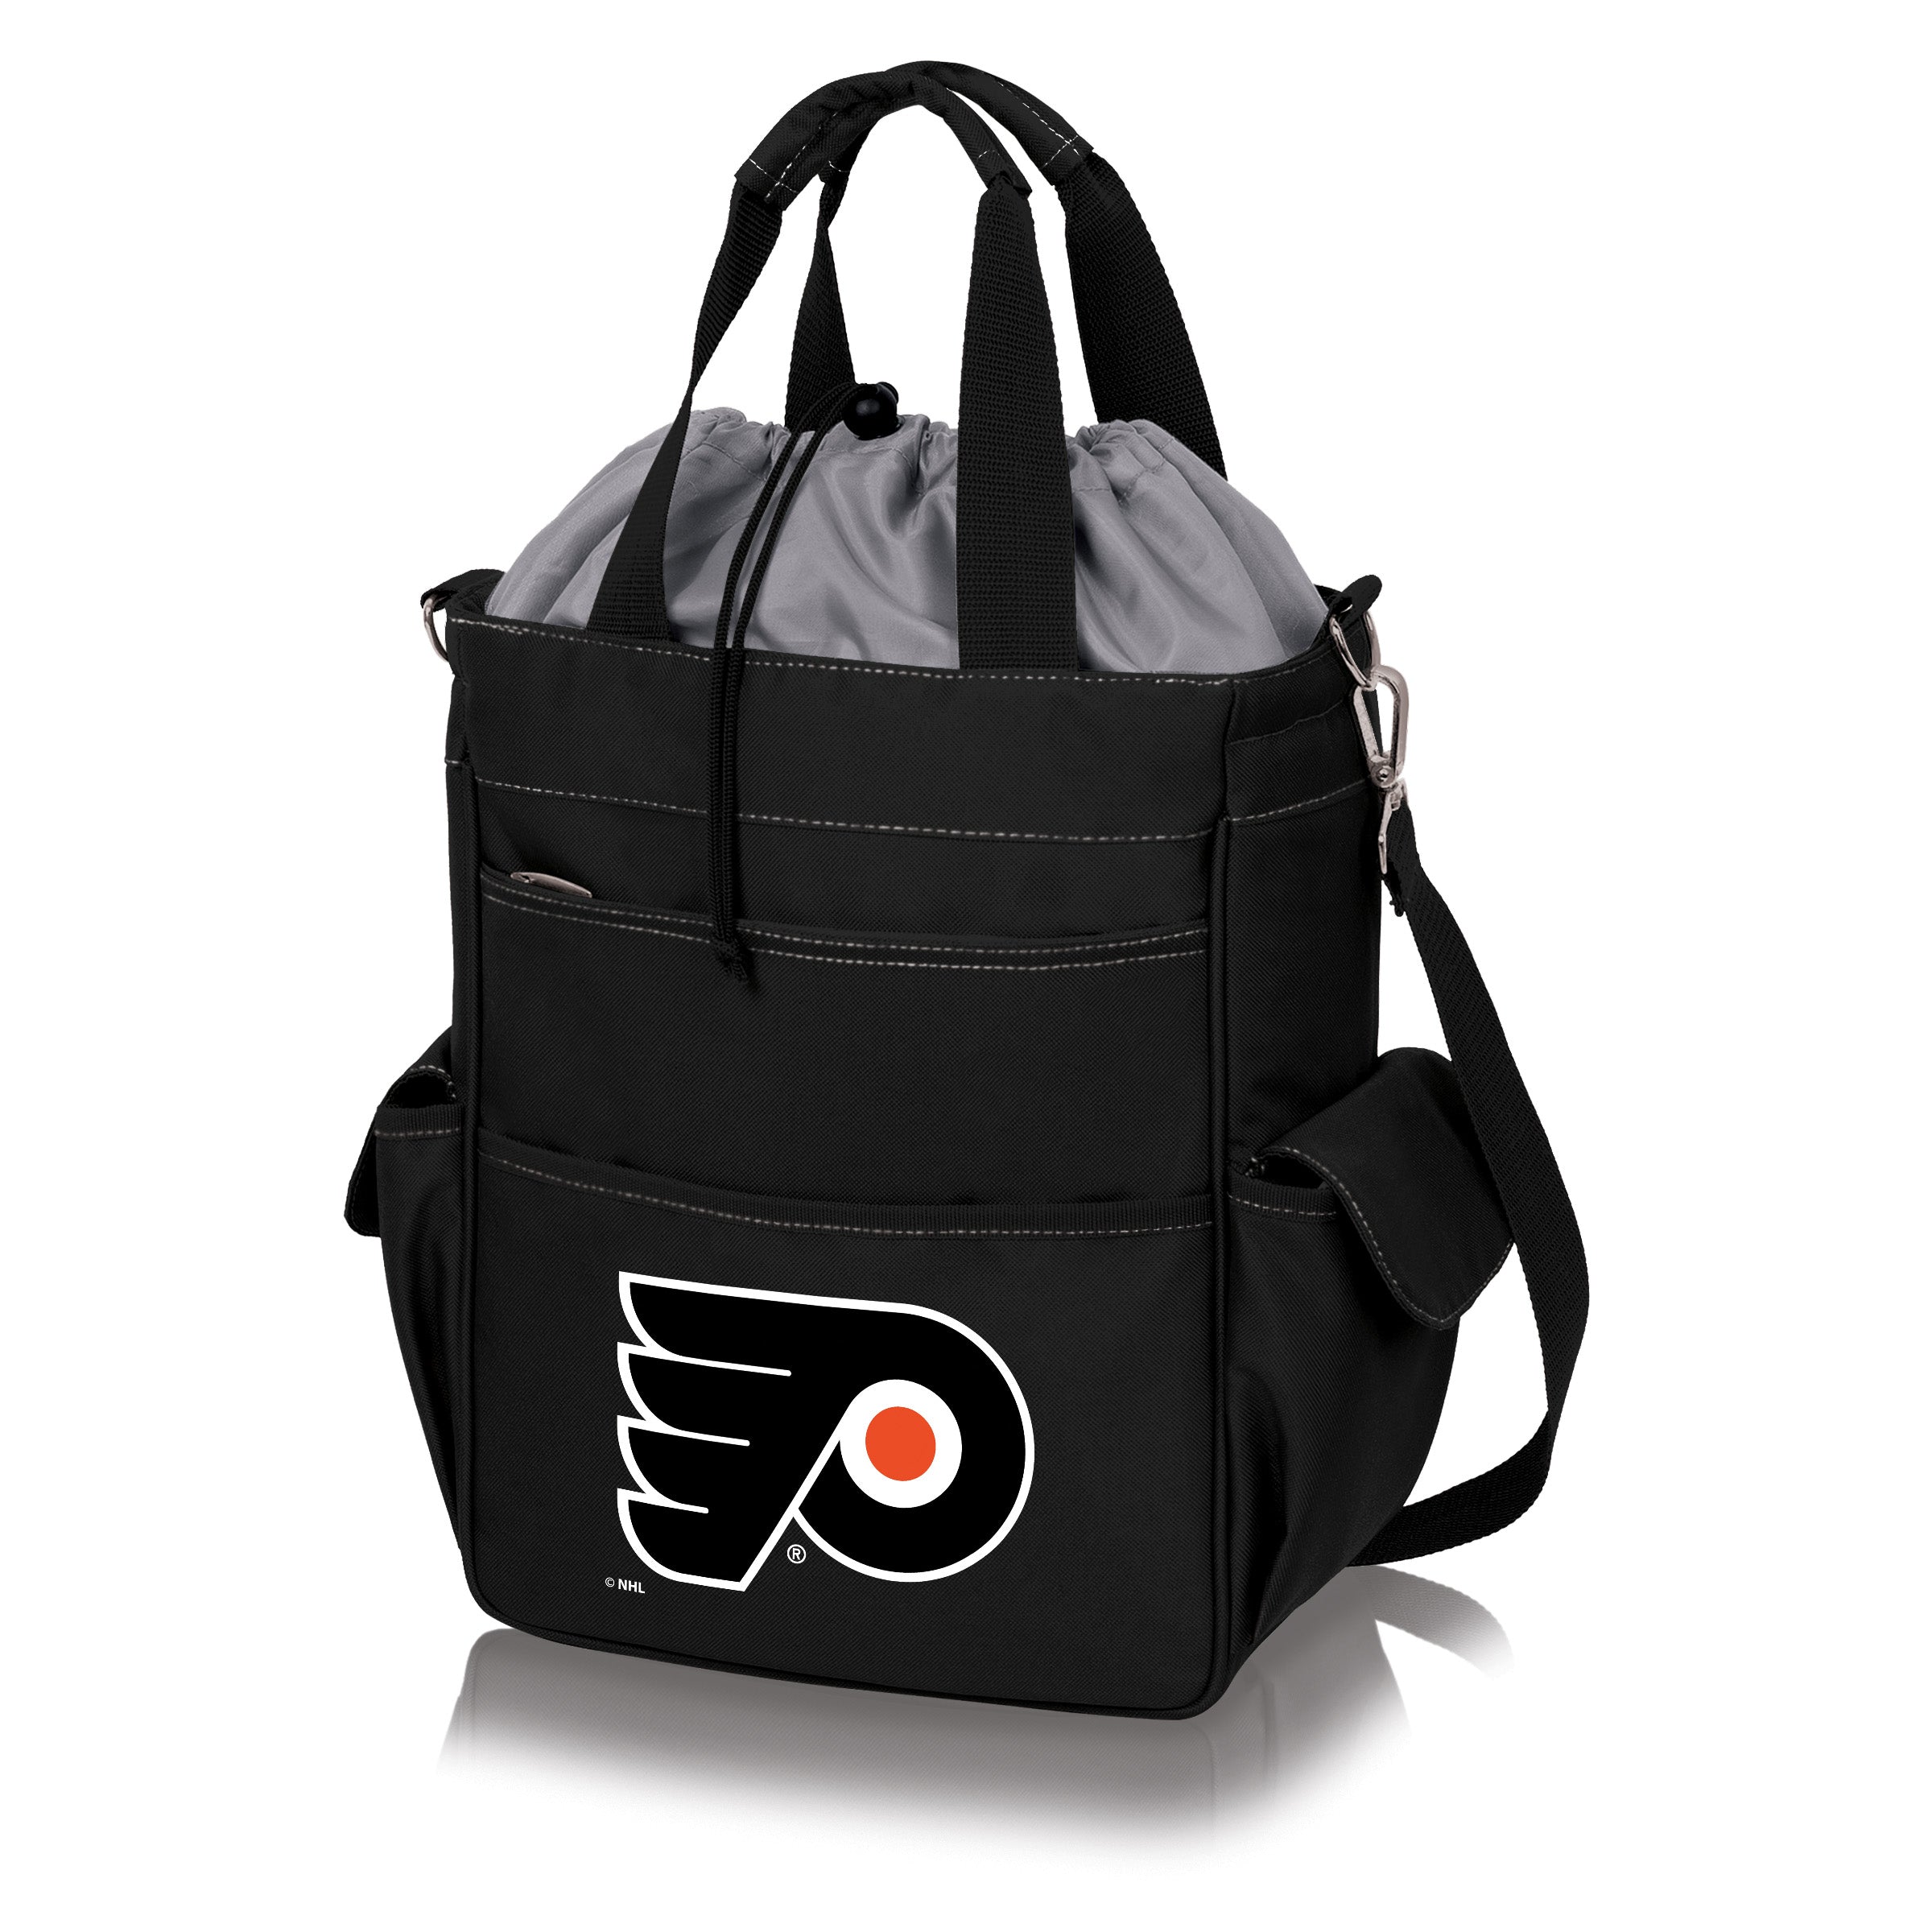 Philadelphia Flyers - Activo Cooler Tote Bag